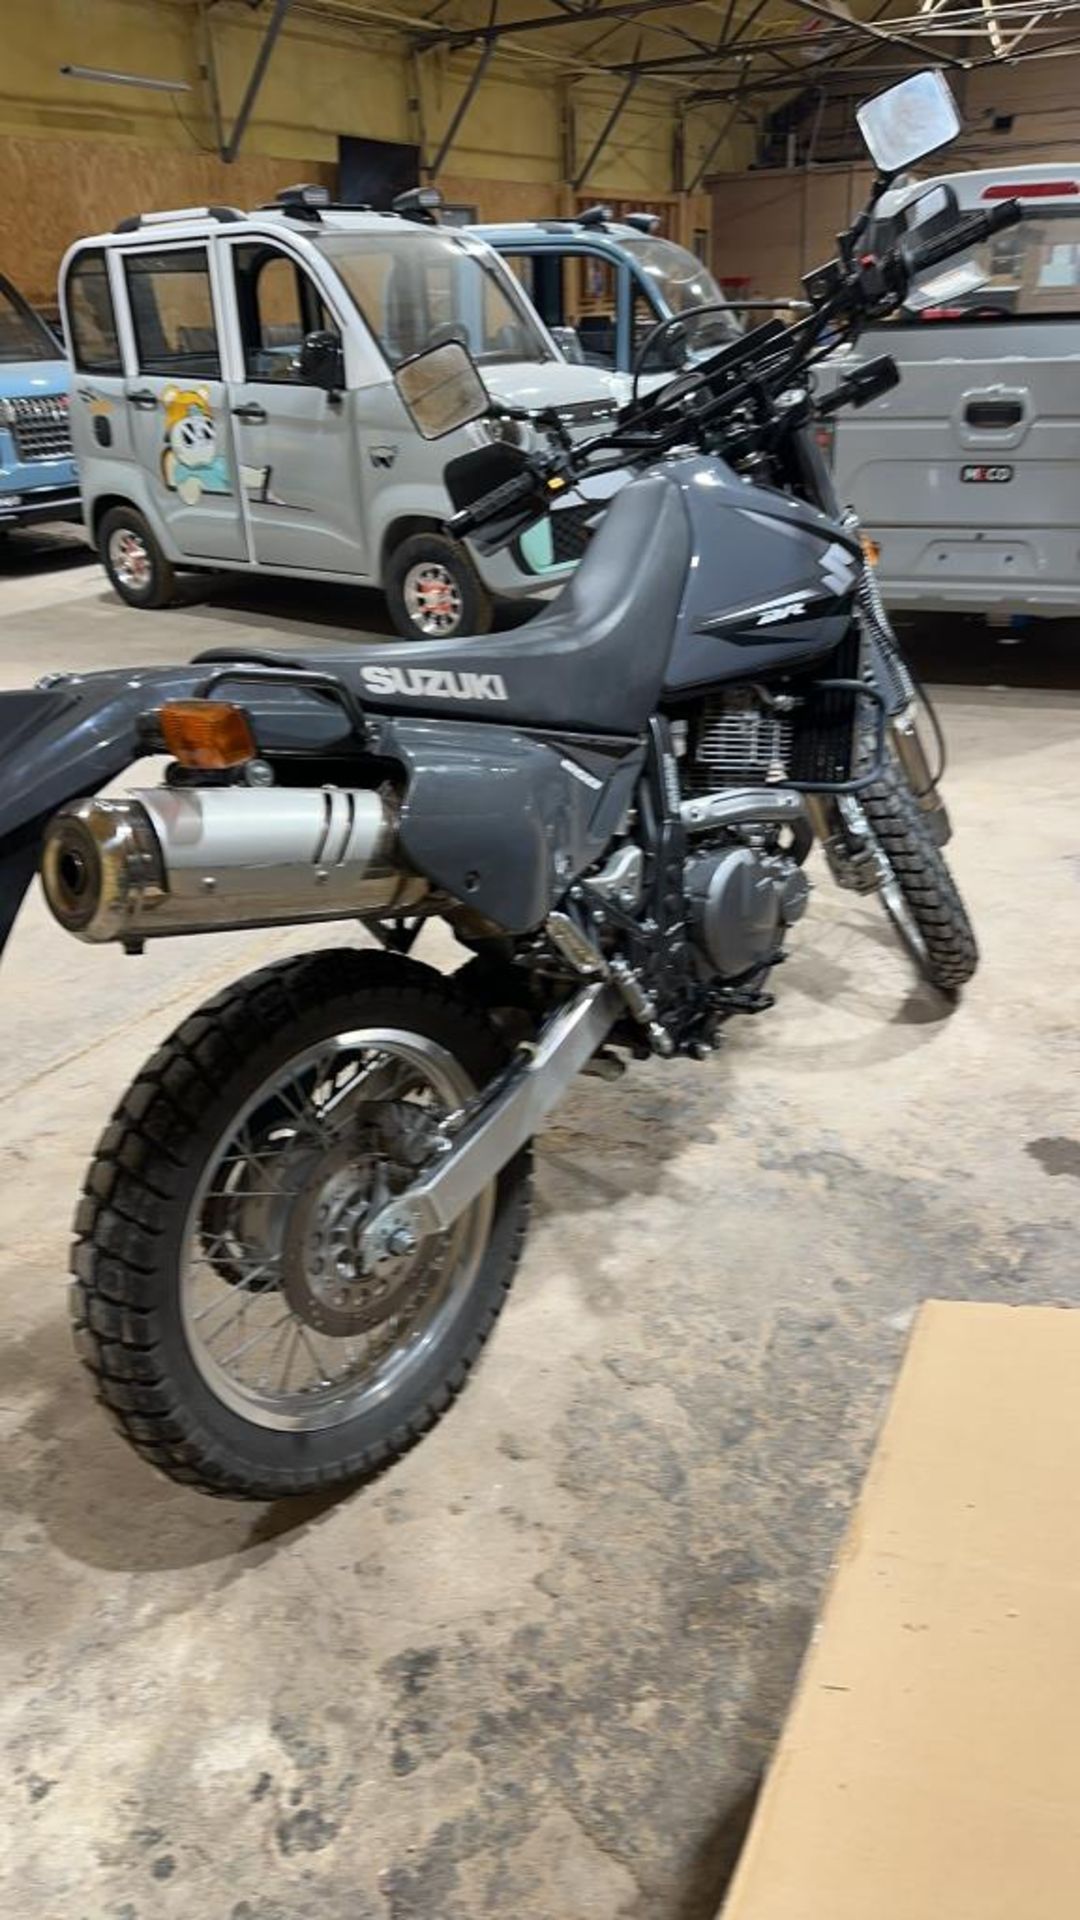 2012 Suzuki DR650S motorcycle - Image 12 of 27